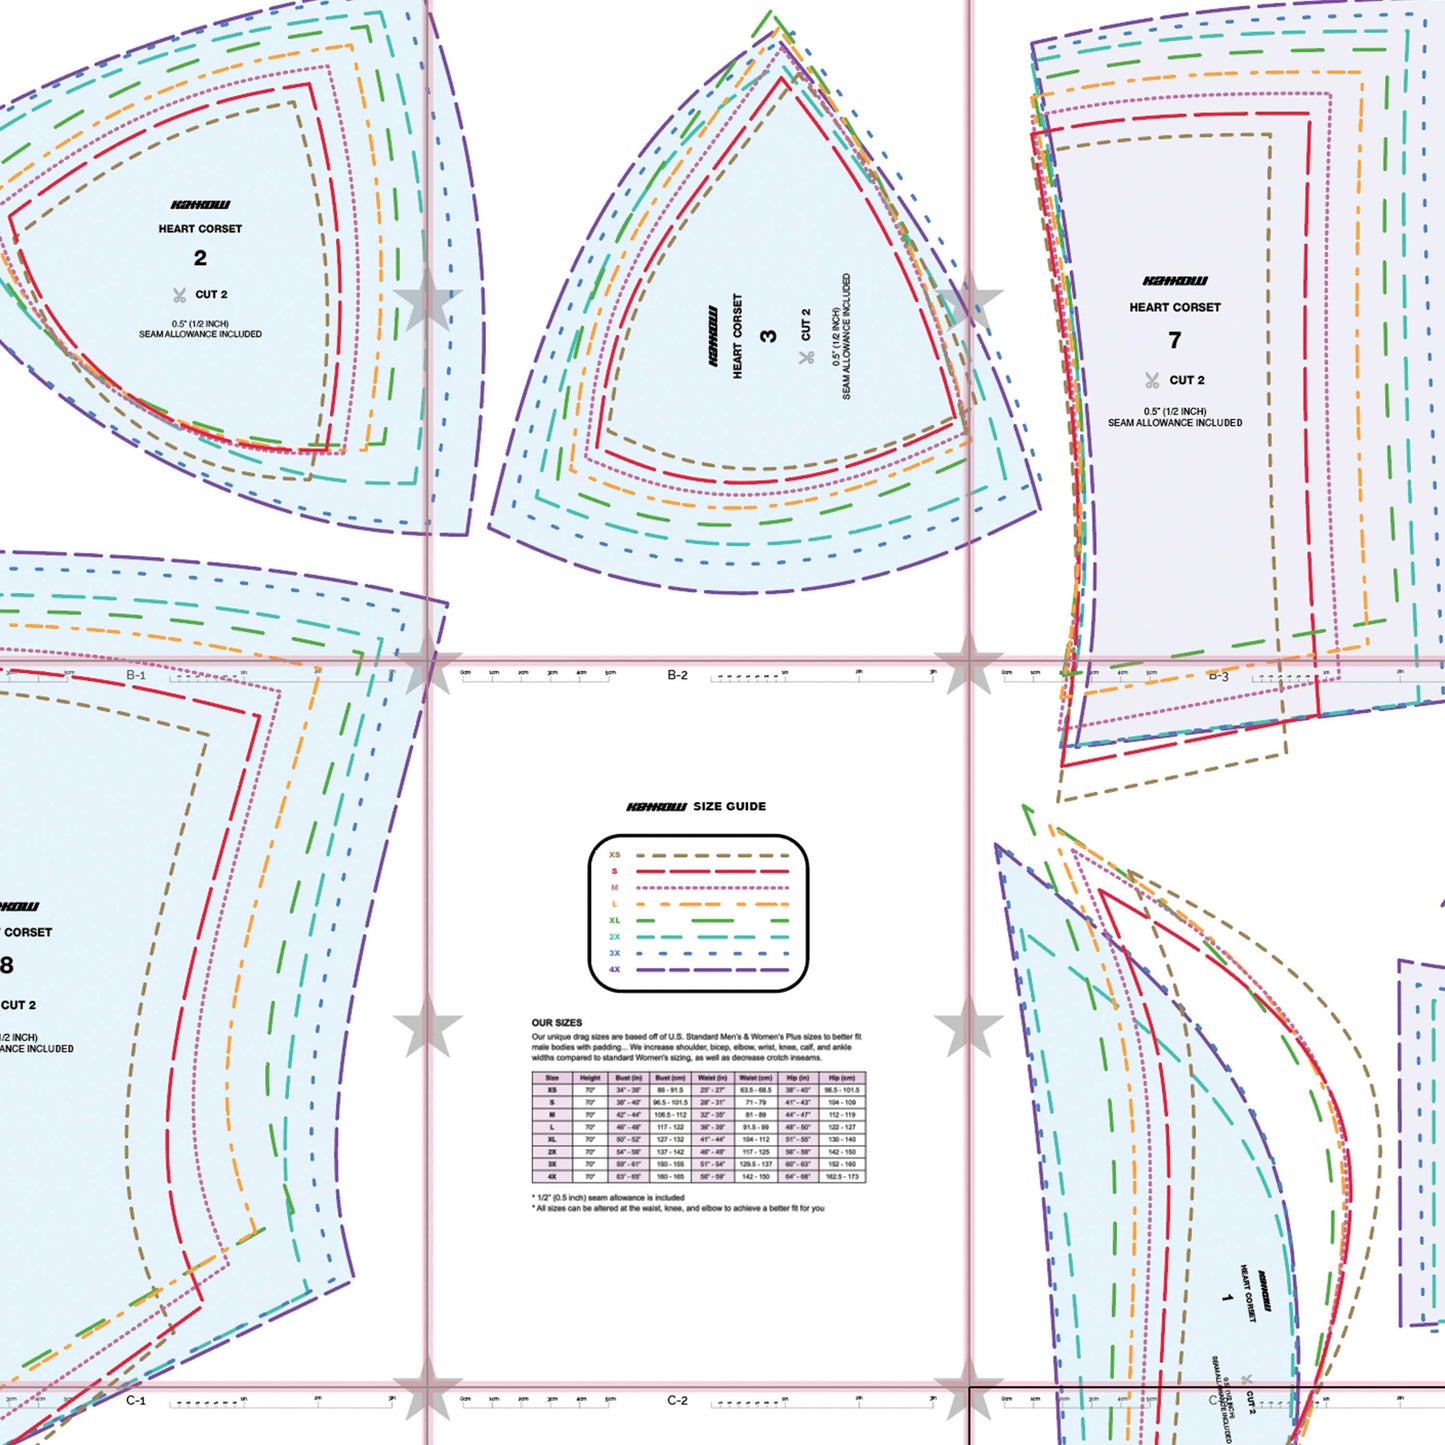 katkow drag queen heart corset sewing pattern layout